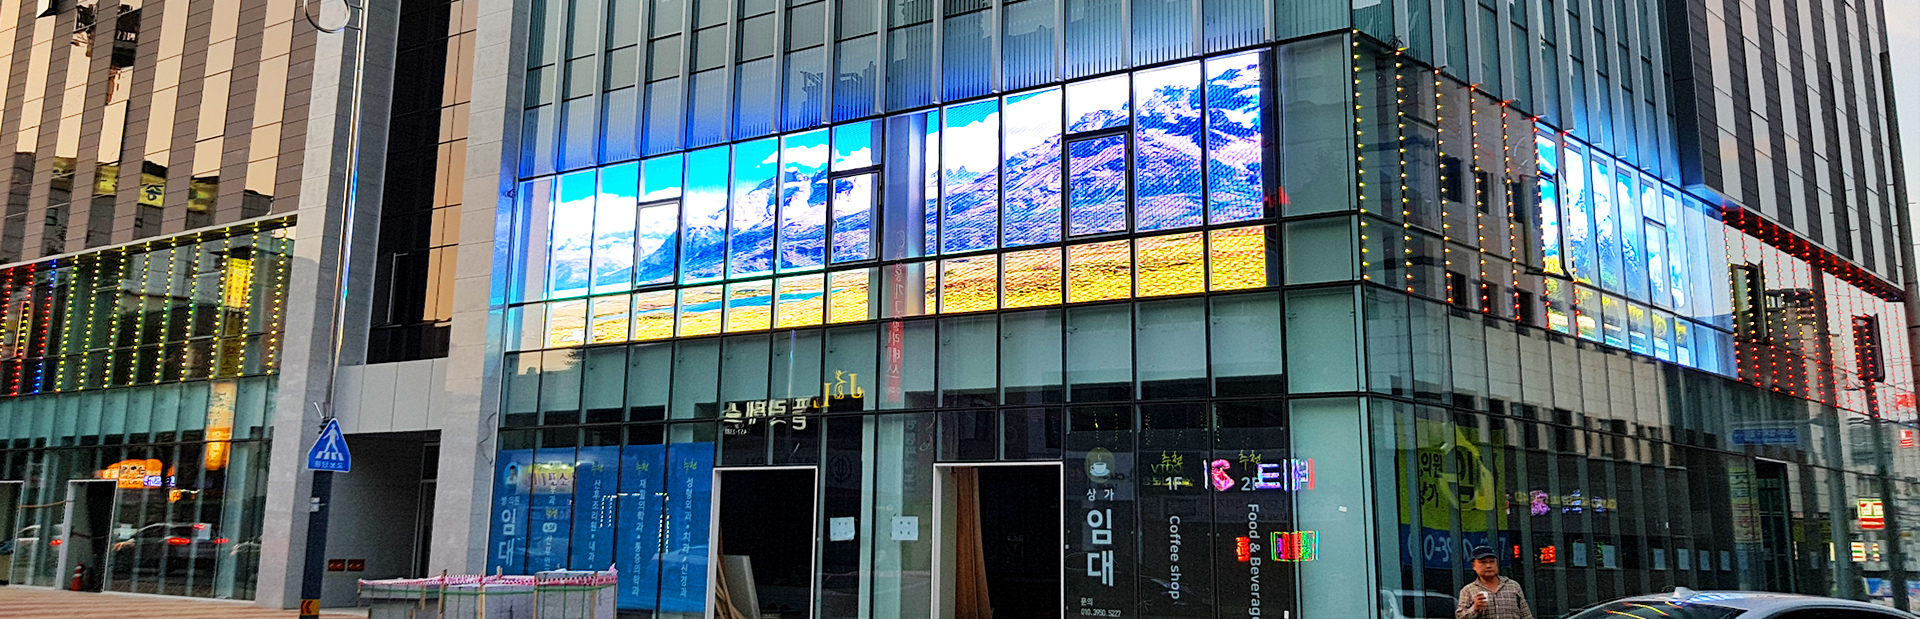 transparent led display indoor outdoor